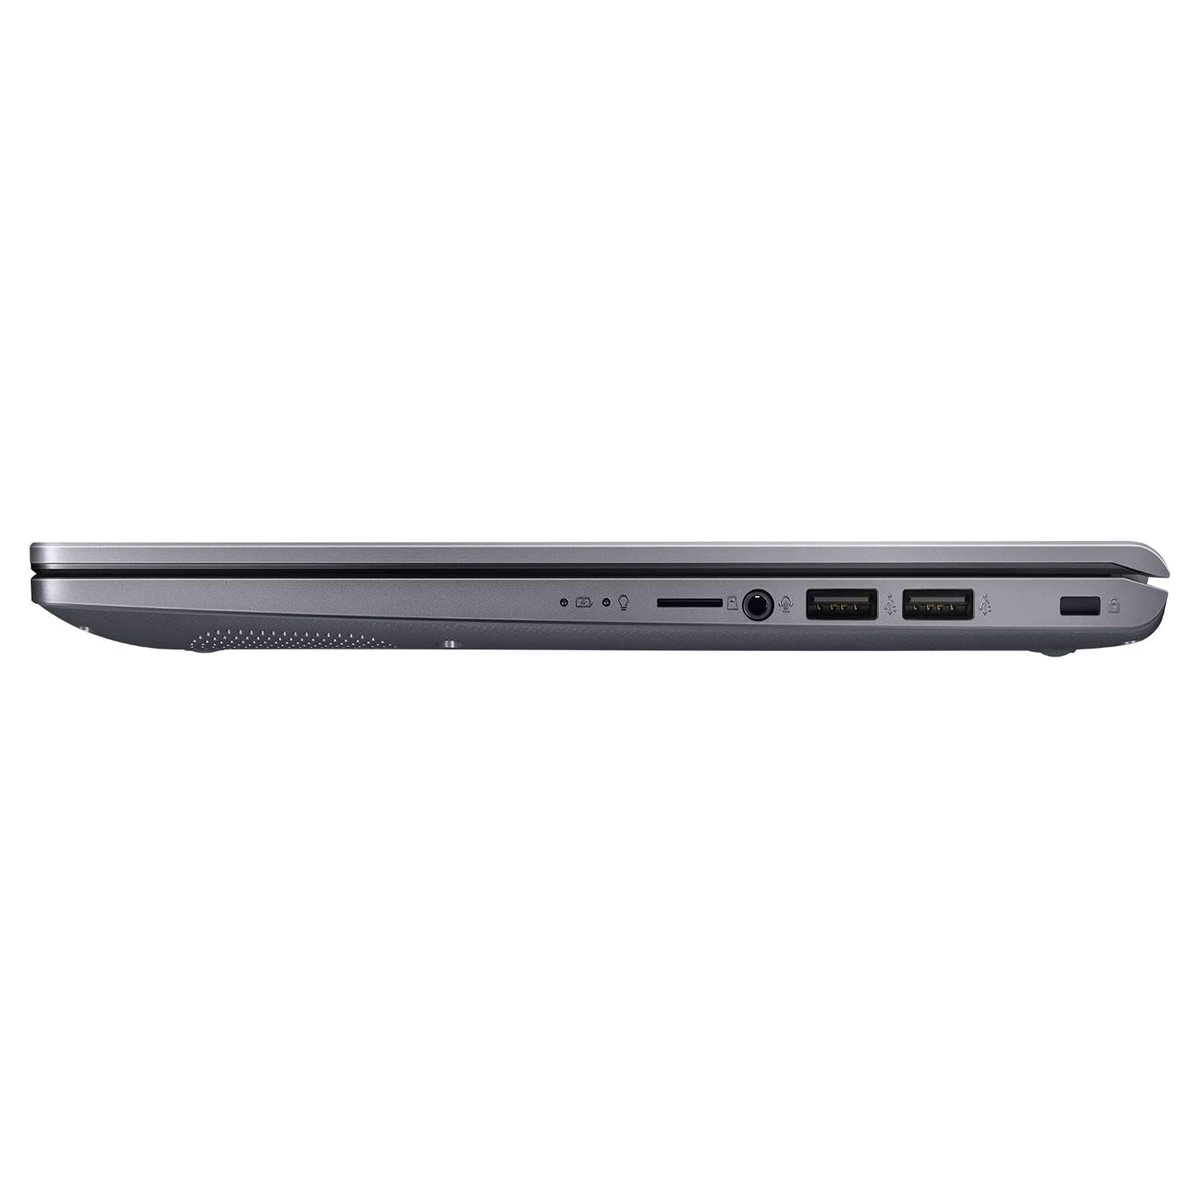 Asus Vivobook X409JA-EK018T Laptop (Gray) -Intel I3-1005G1, 4GB RAM, 1TB HDD, Intel HD Graphics,14 inches,Windows 10,Eng-Arb-KB